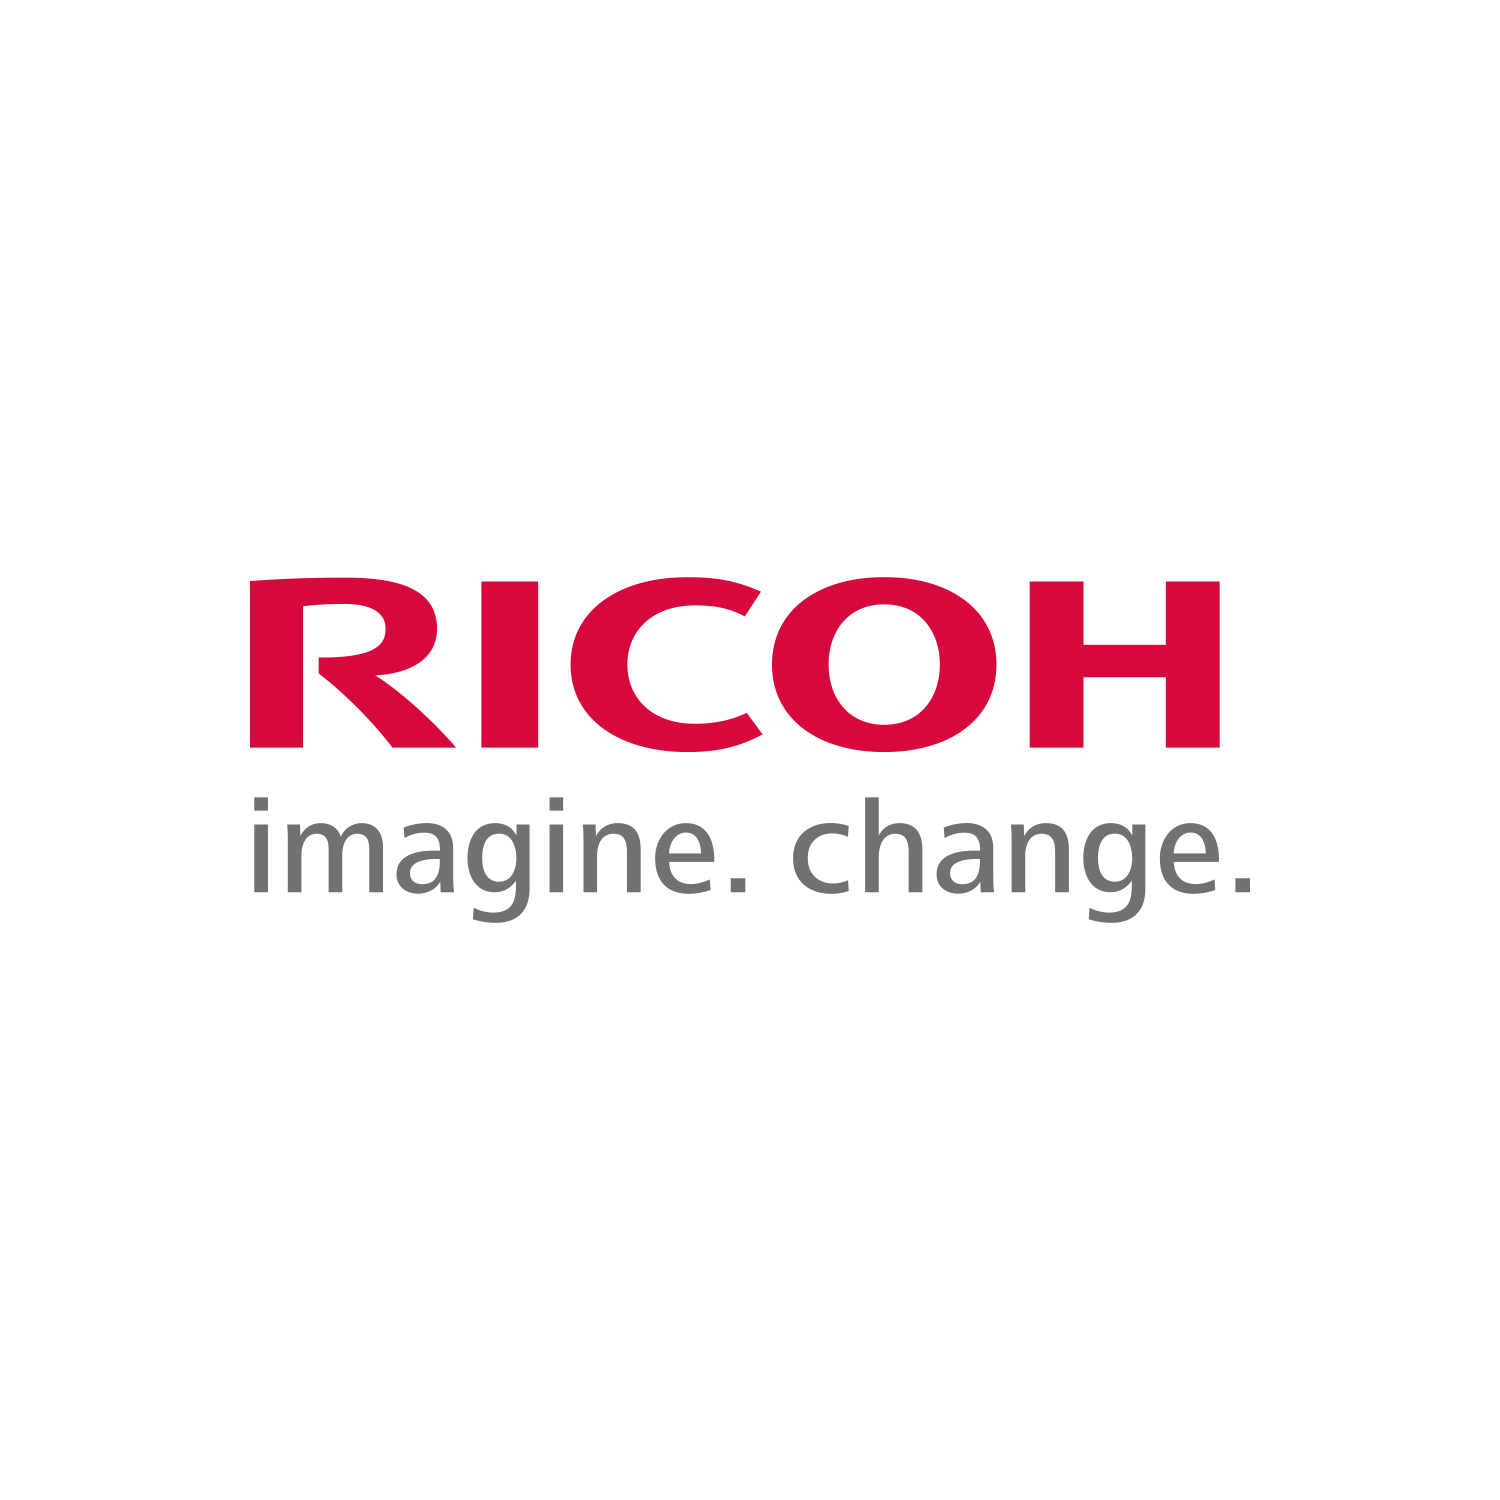 Ricoh logo text of imagine. create.